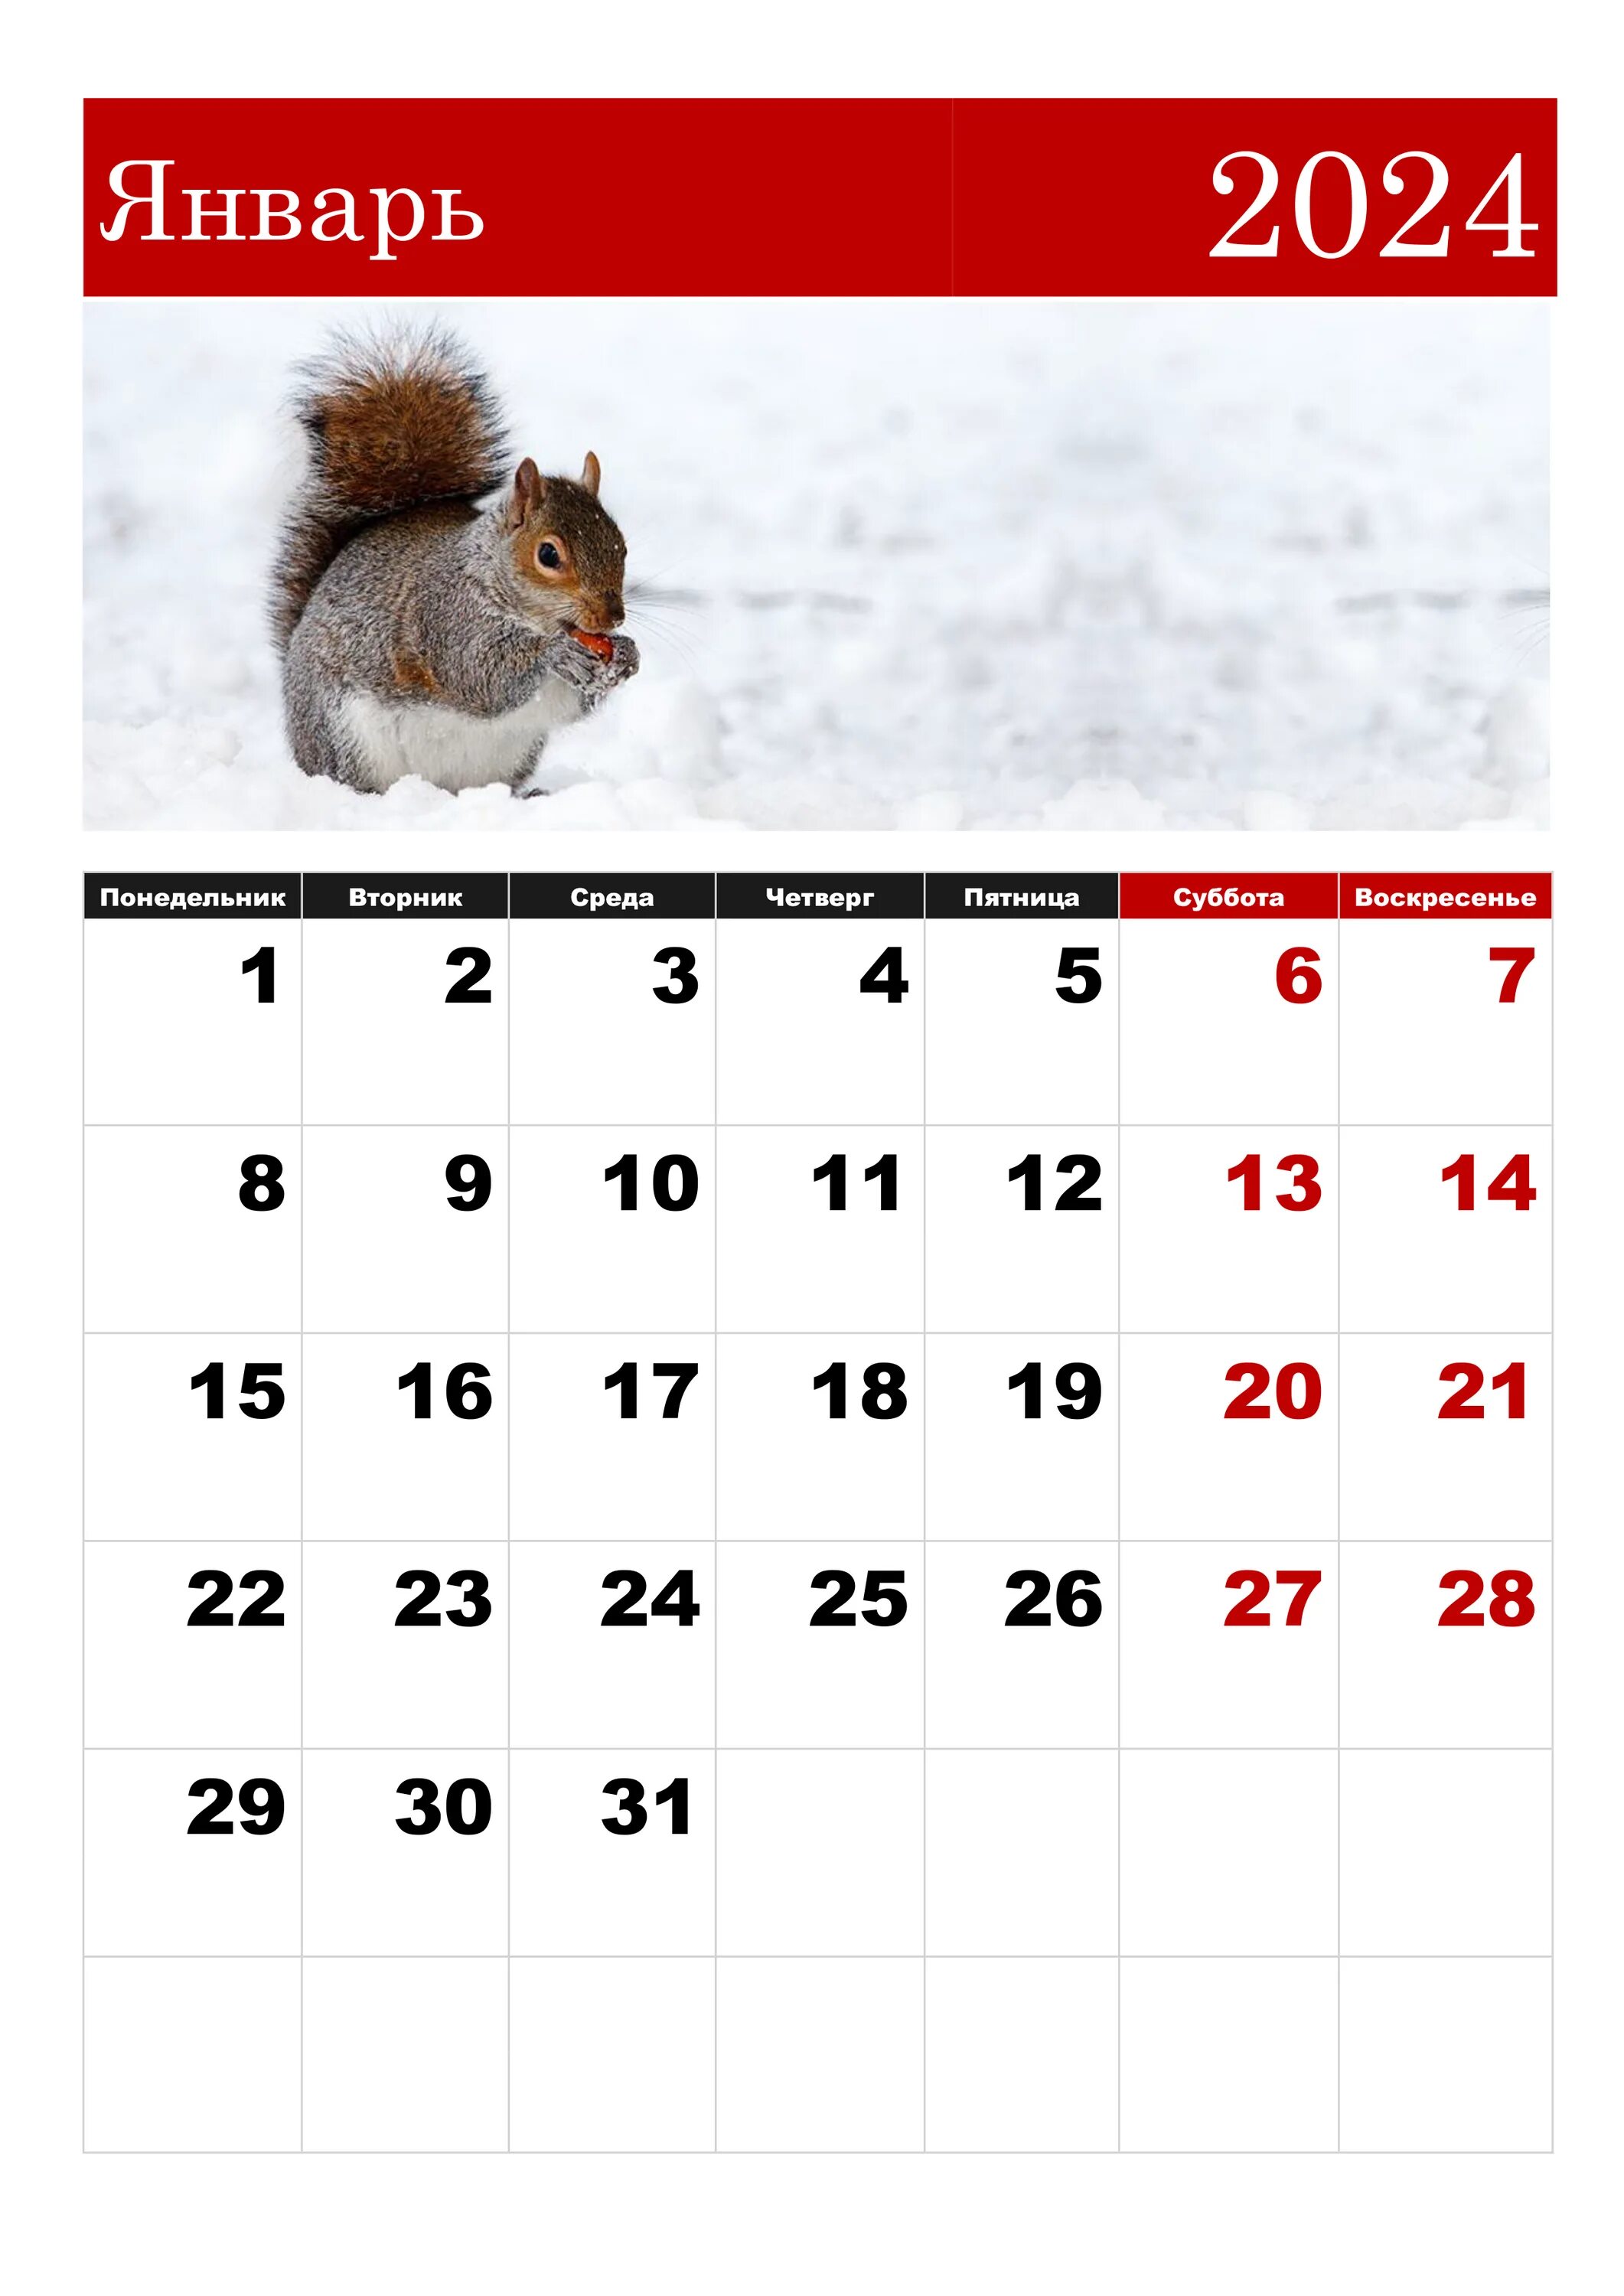 Календарная январь 2024. ЯНВАРЬРЬ 2024. Календарь январь. Календарь на январь 2024 года.